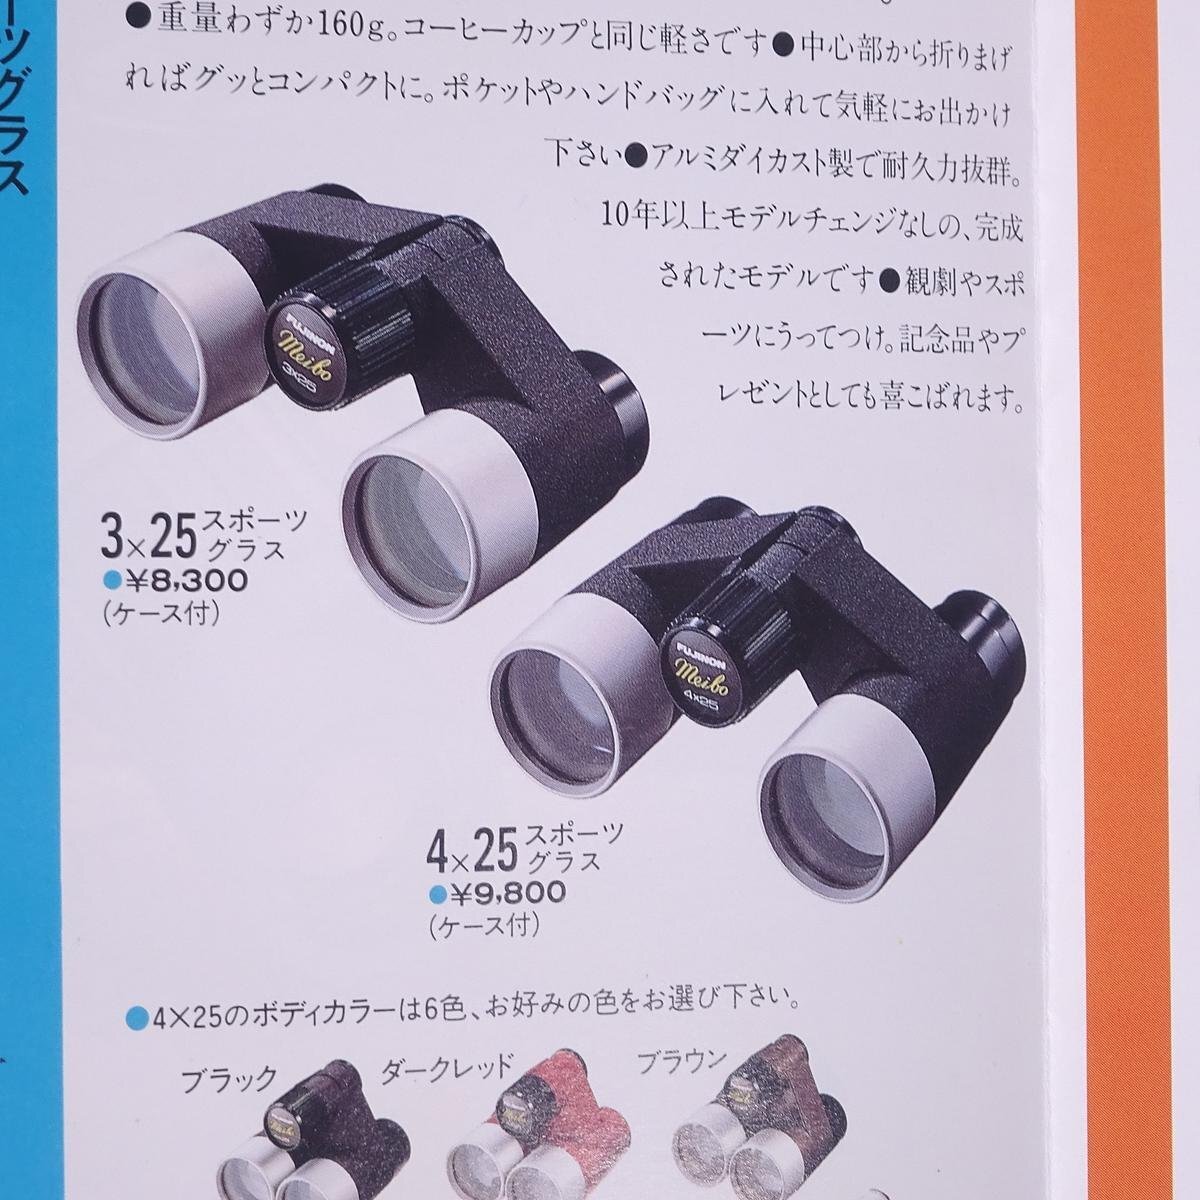 FUJINON Fuji non binoculars Fuji photograph light machine corporation 1985 Showa era small booklet catalog pamphlet binoculars outdoor 